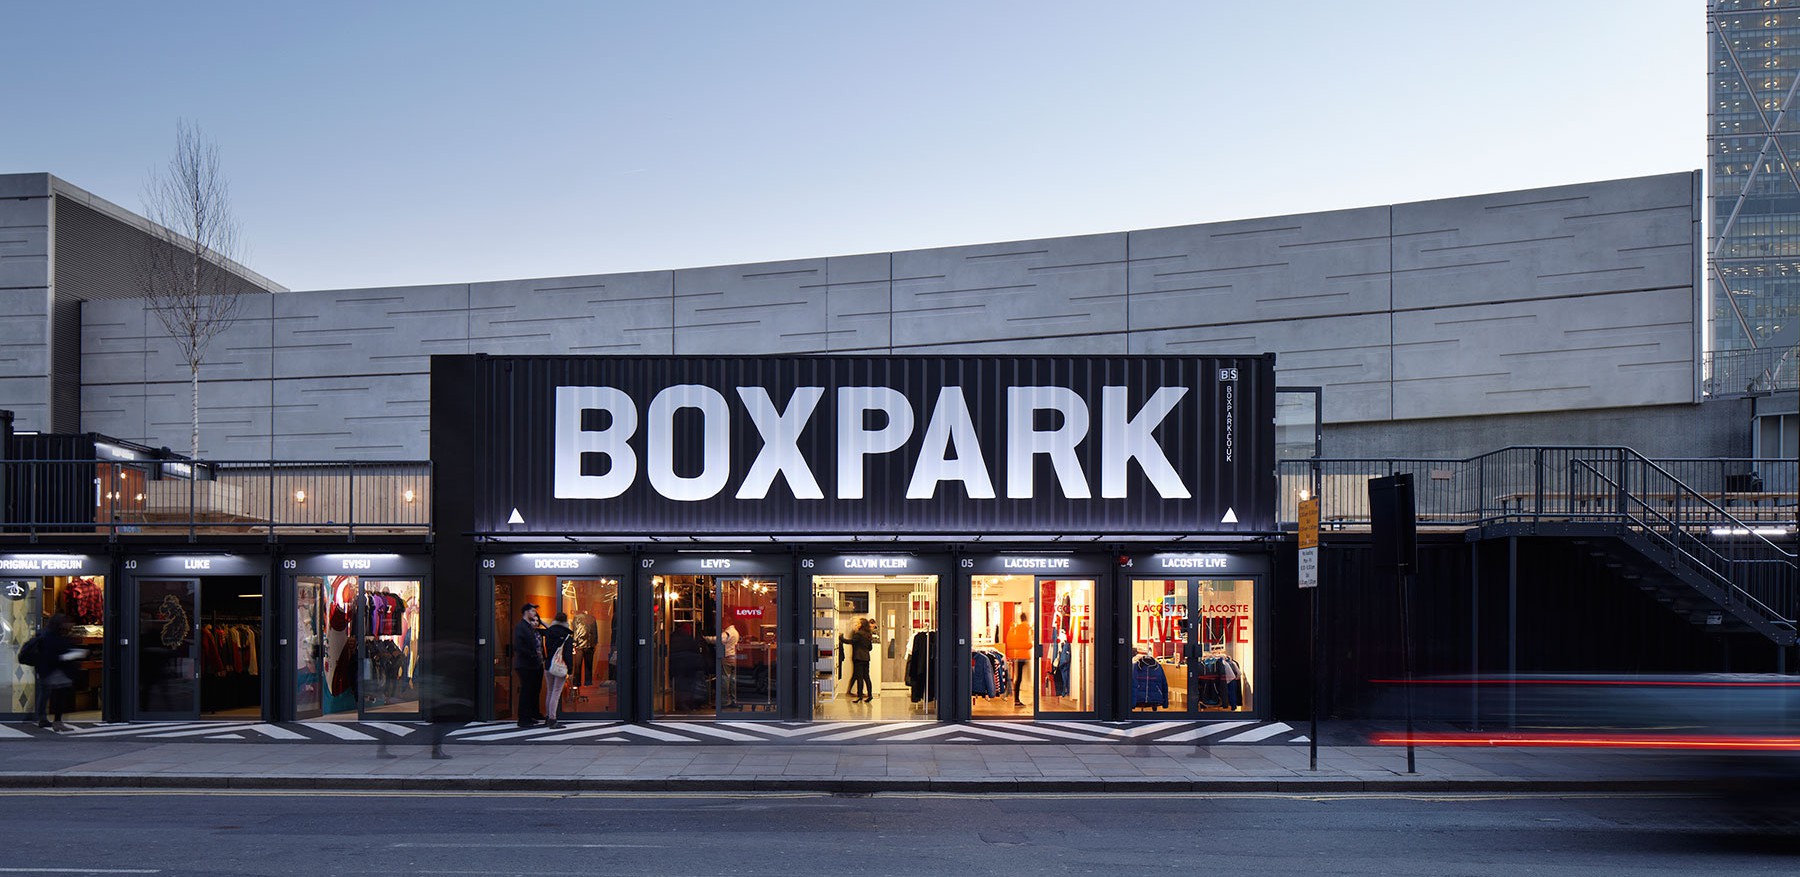 BOXPARK Shopping Mall in Dubai – Shopping Malls in Dubai, UAE